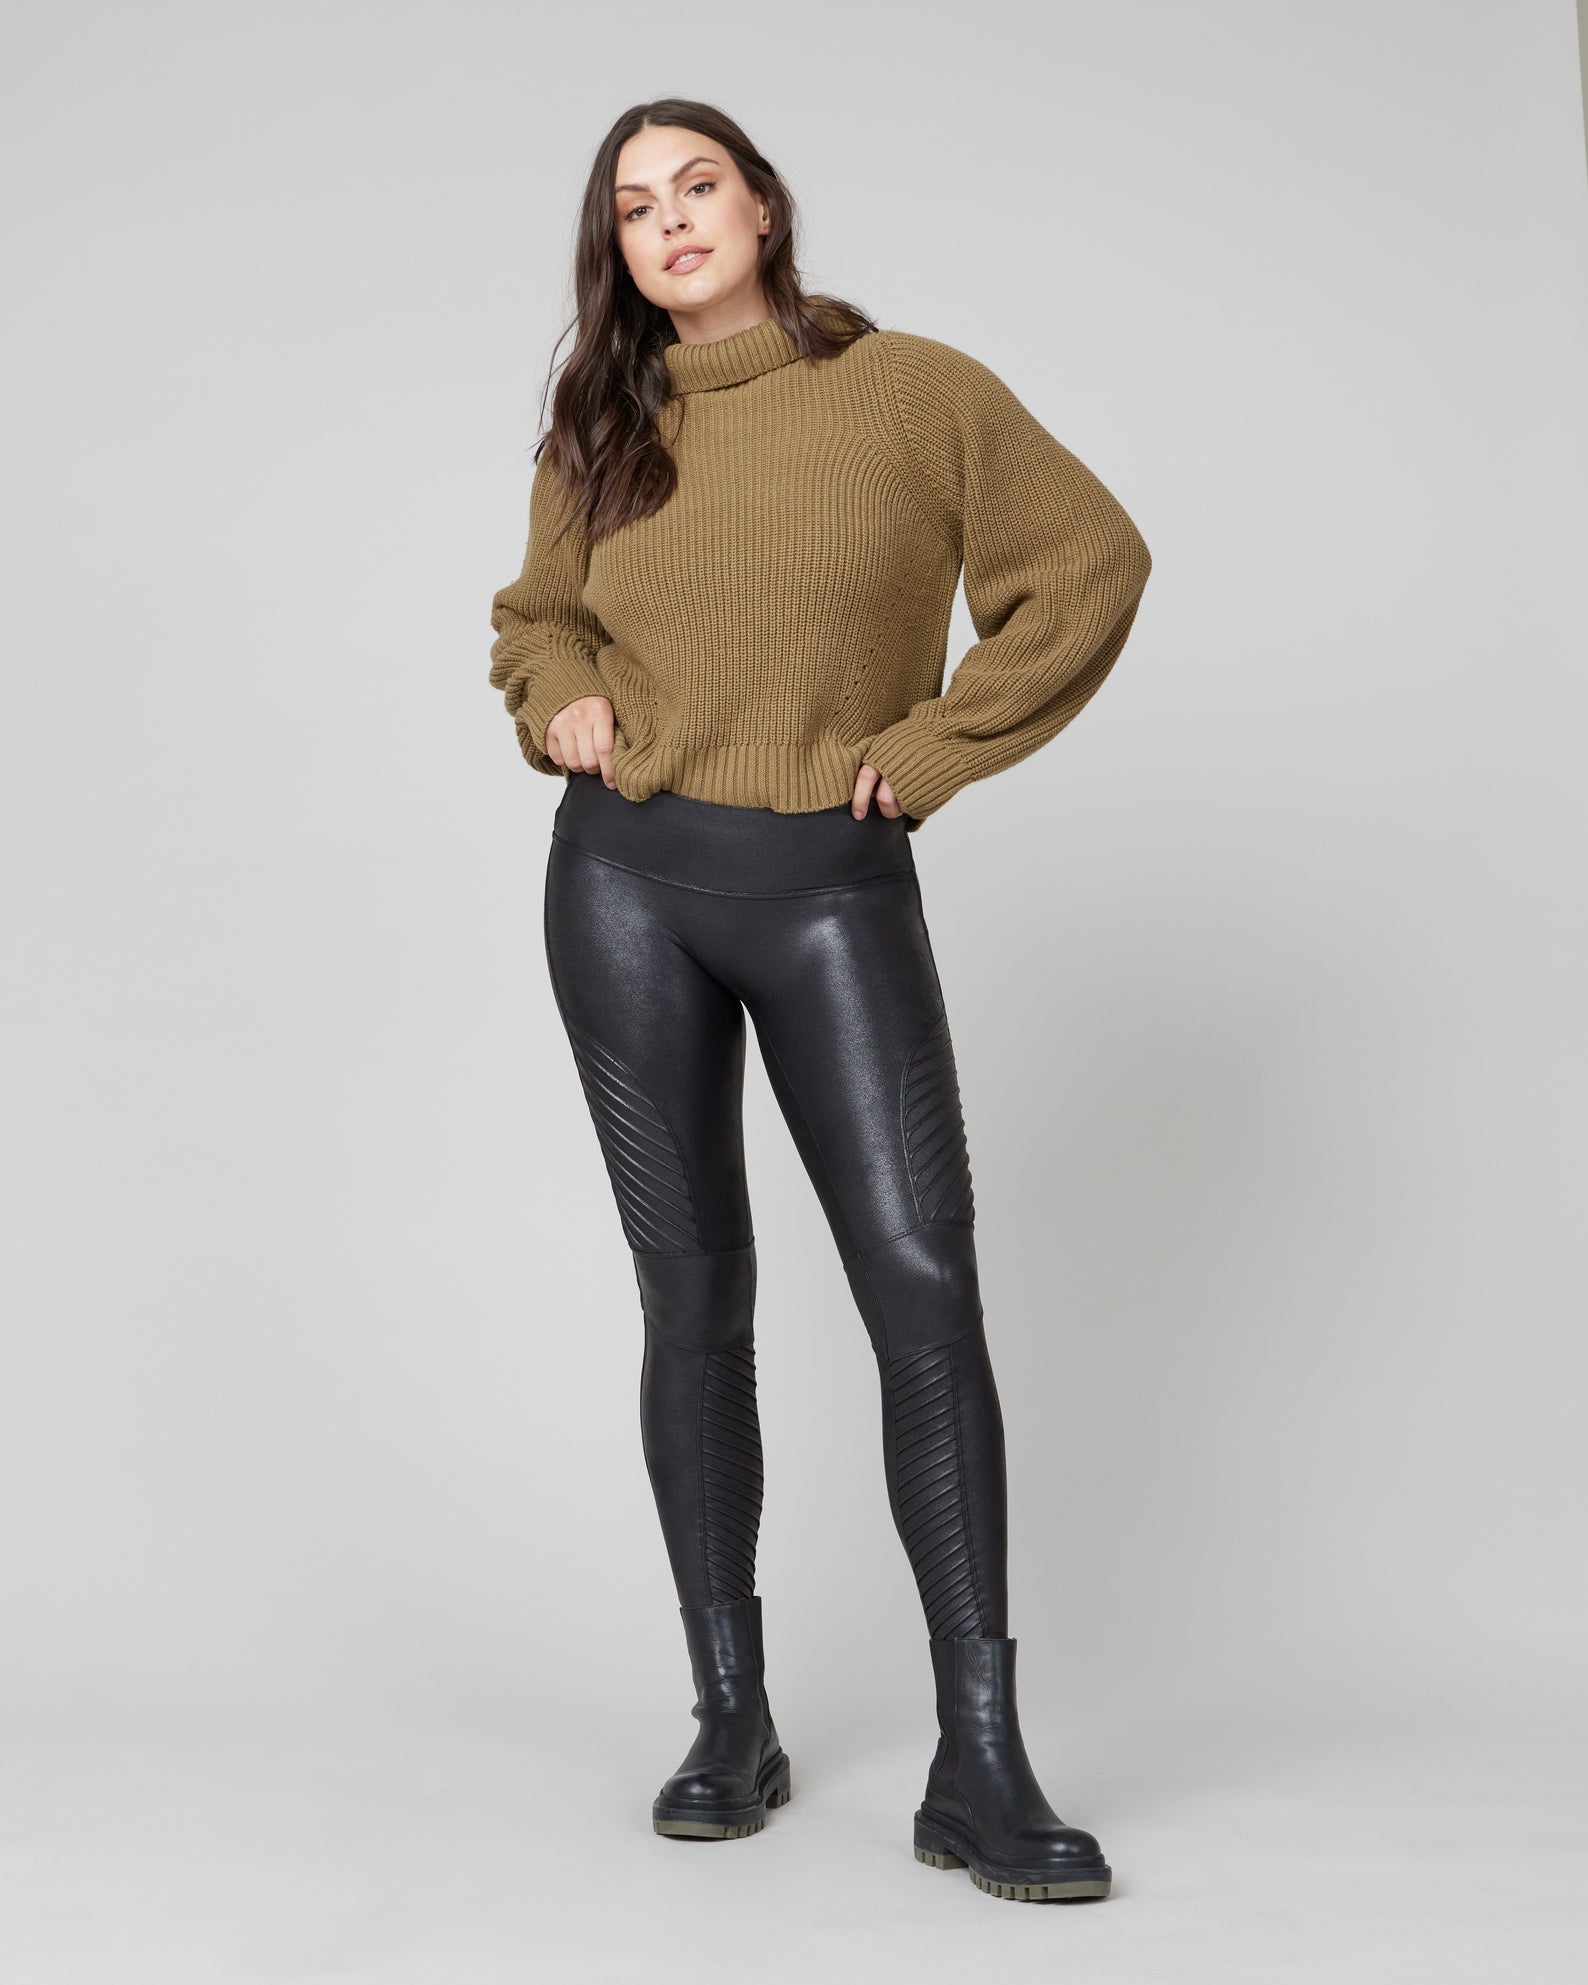 SPANX Women's Faux Leather Leggings 2437, Black, Medium at